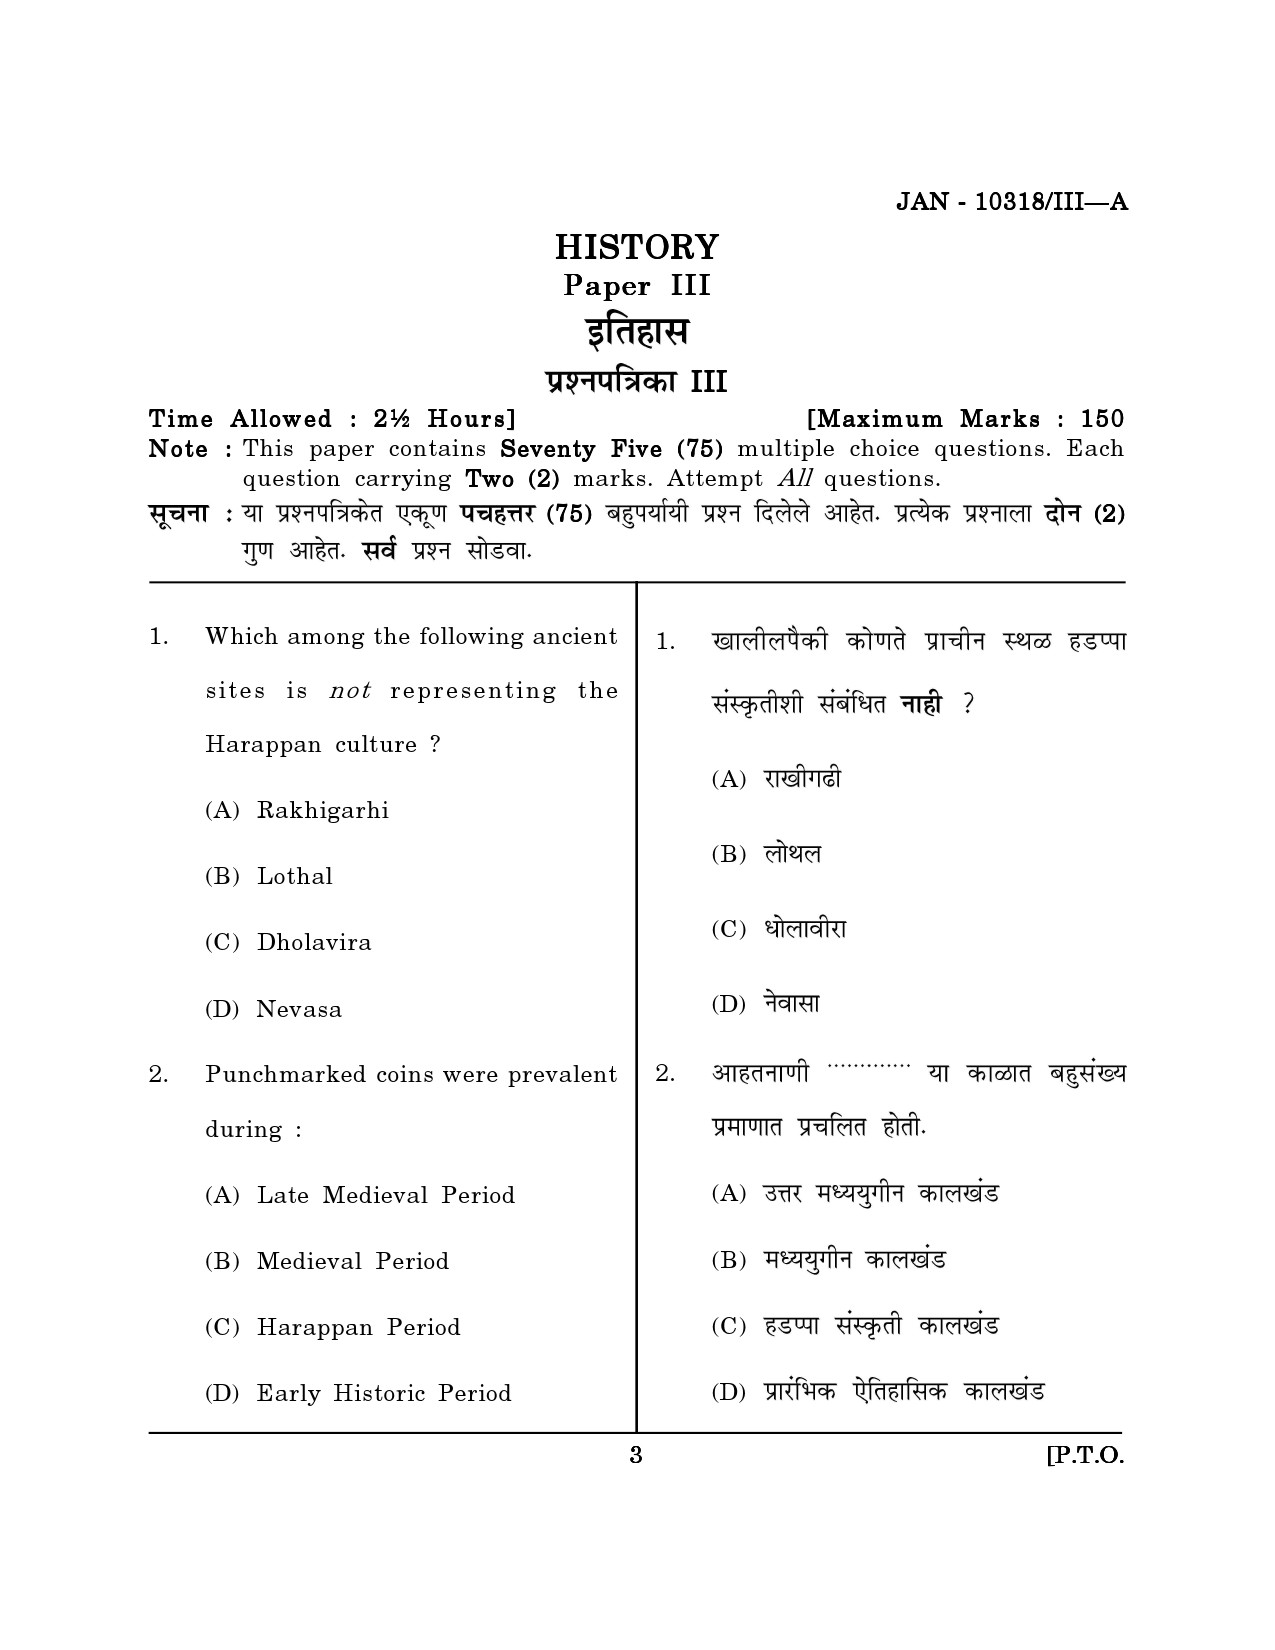 Maharashtra SET History Question Paper III January 2018 2